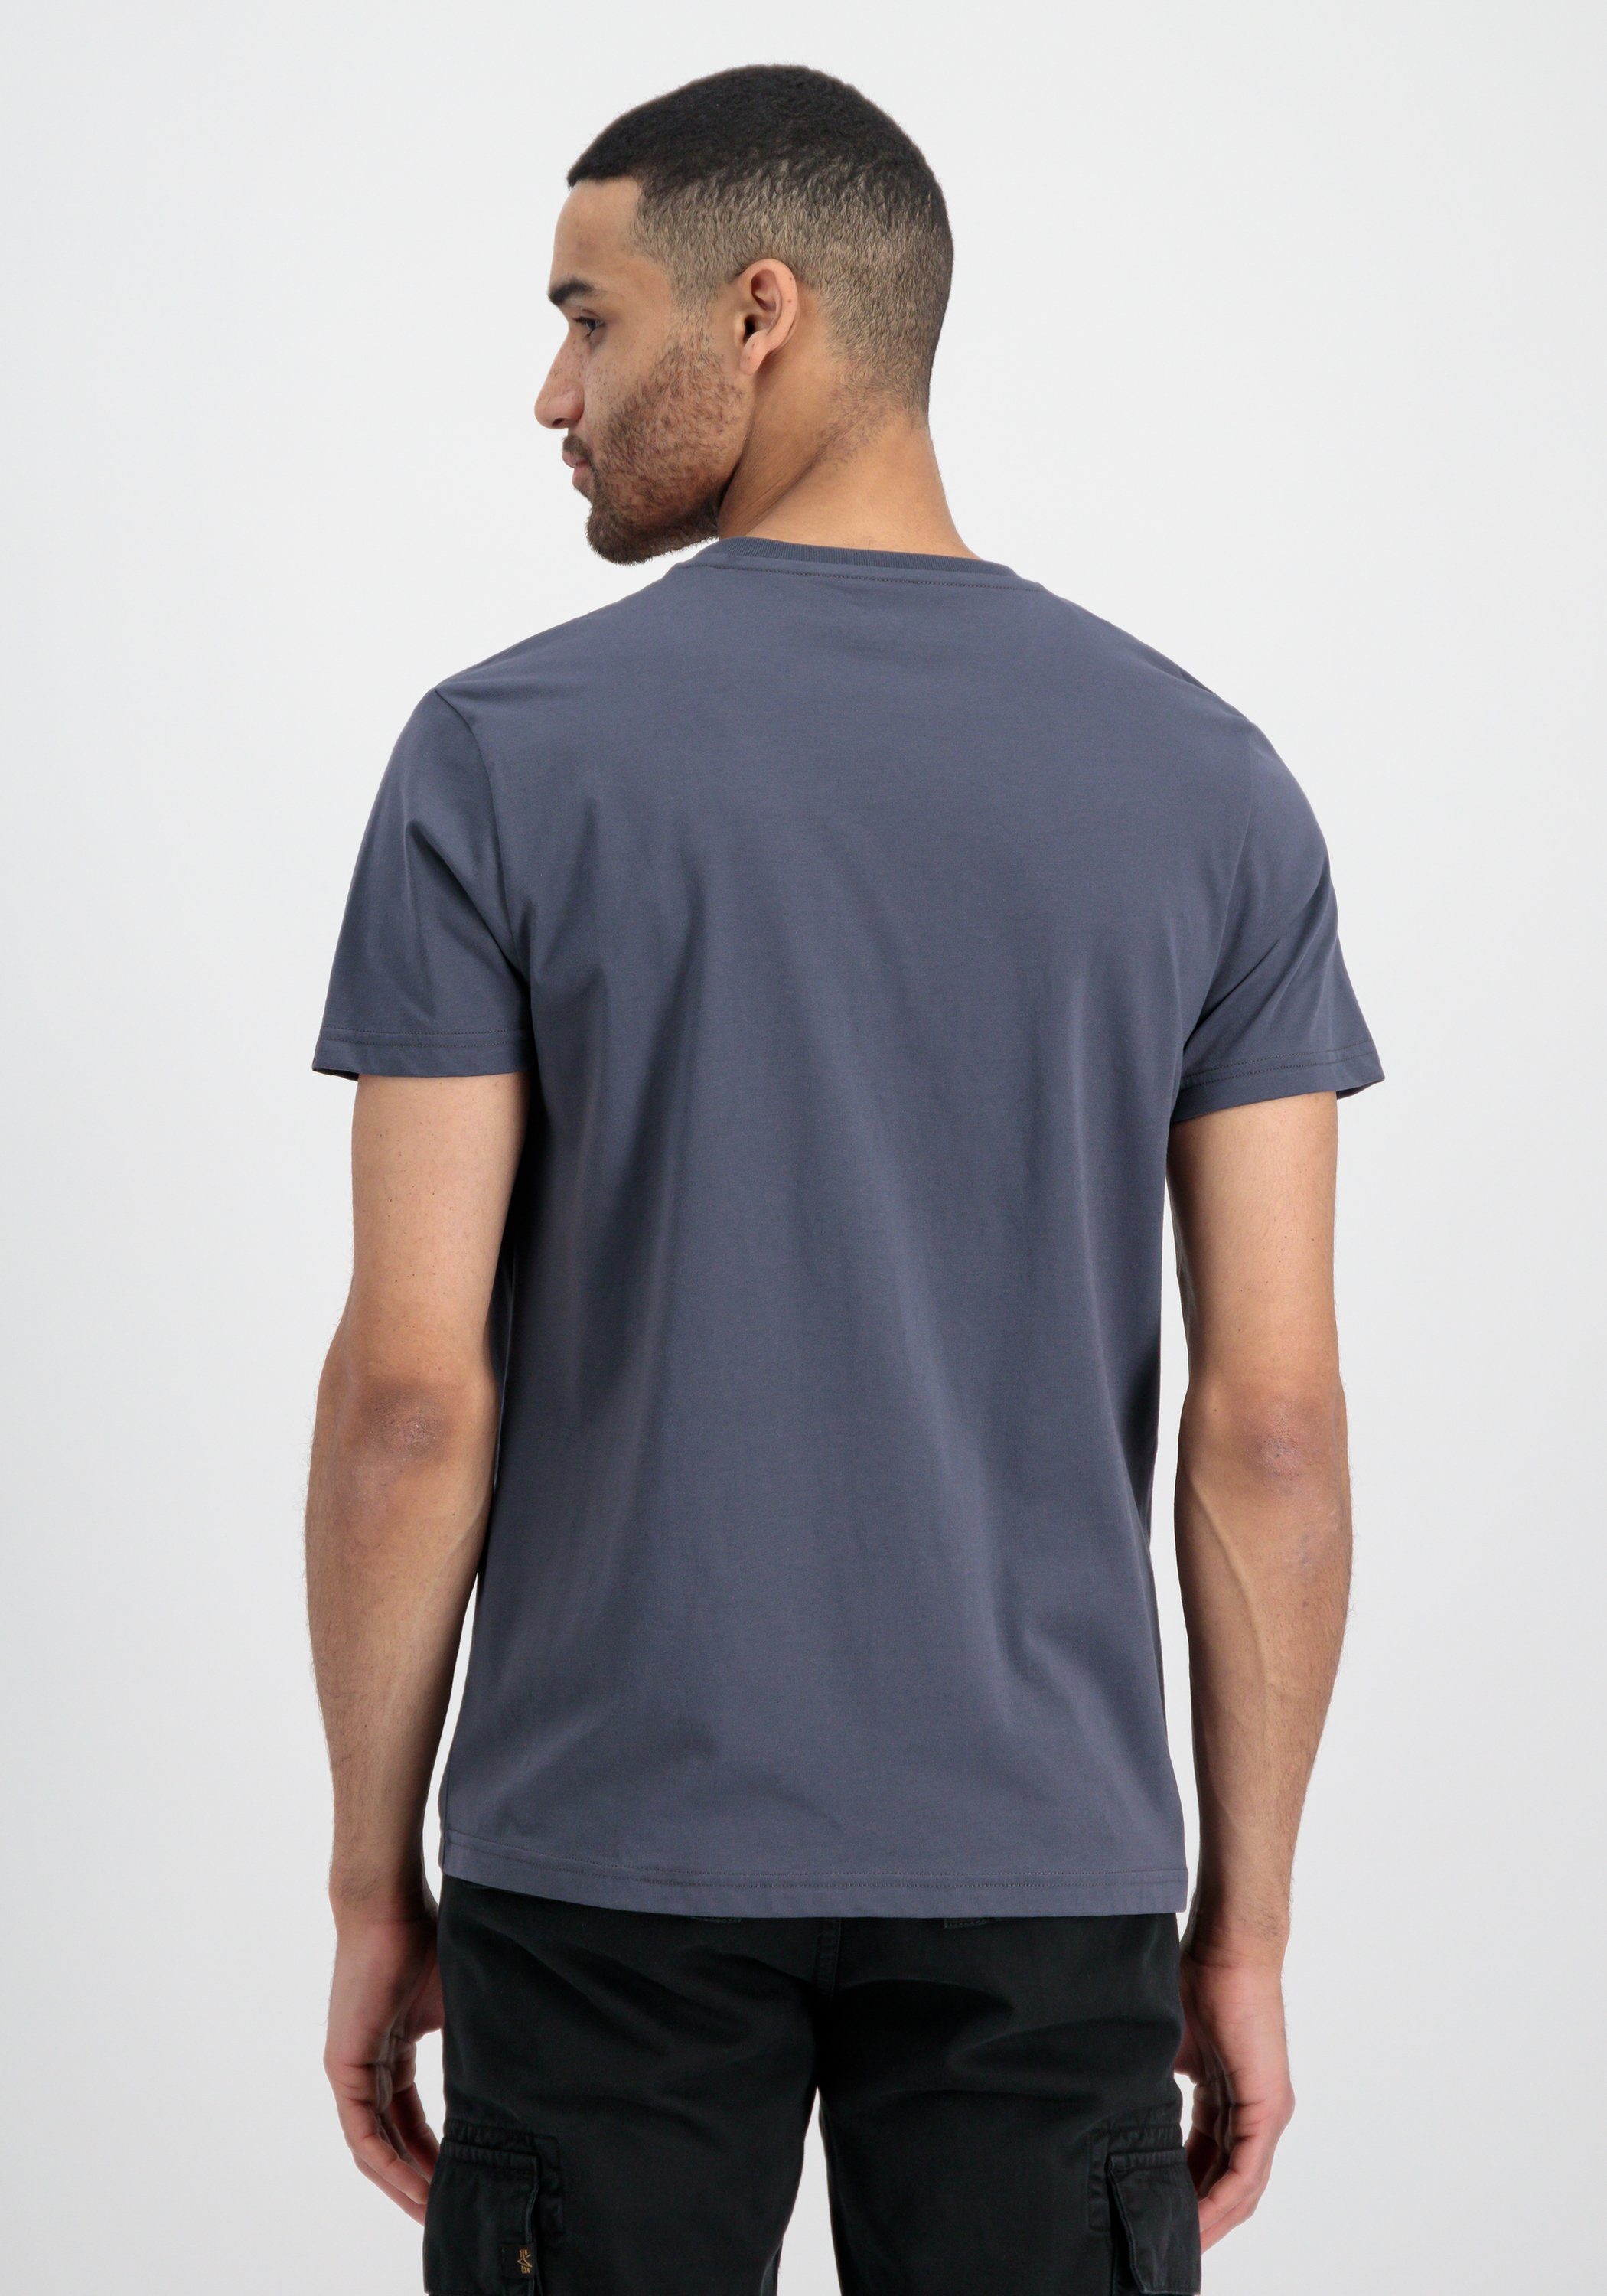 Alpha Industries T-shirt Label Men online T-Shirts snel | Pocket OTTO T Alpha gekocht Industries 